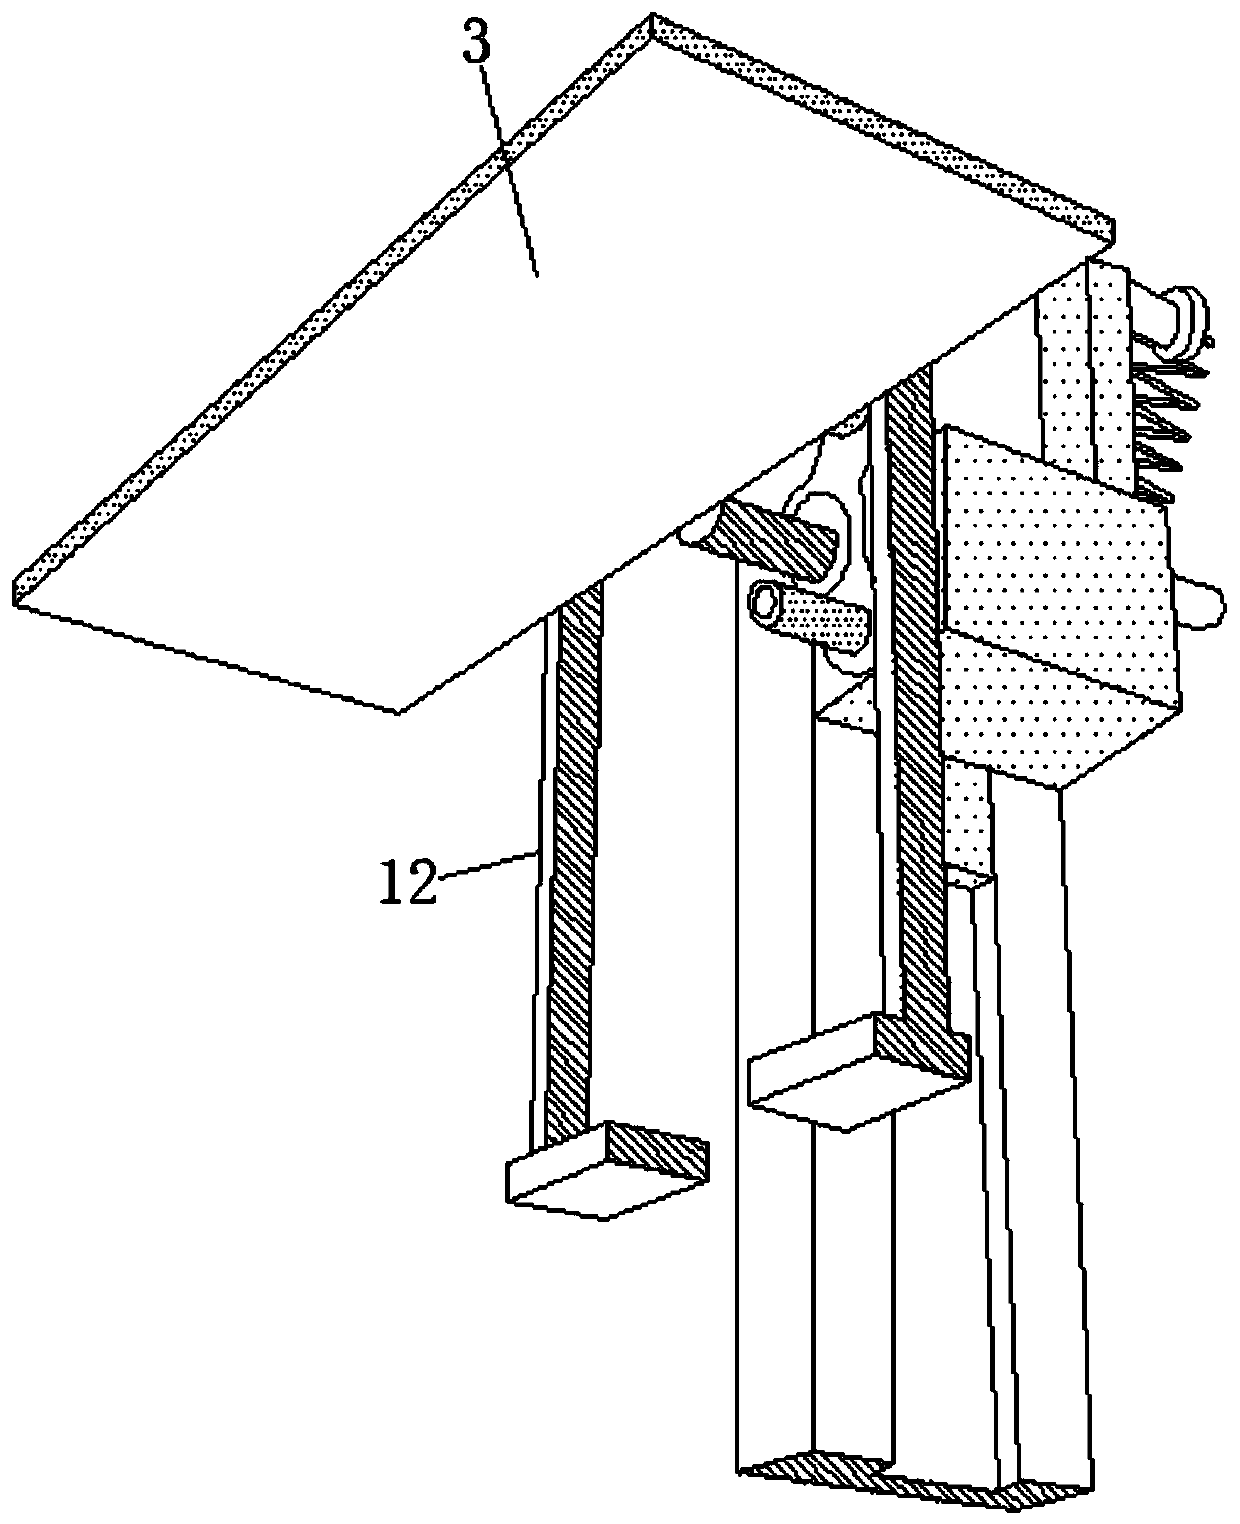 Double-sided ironing device capable of overturning based on reciprocating motion